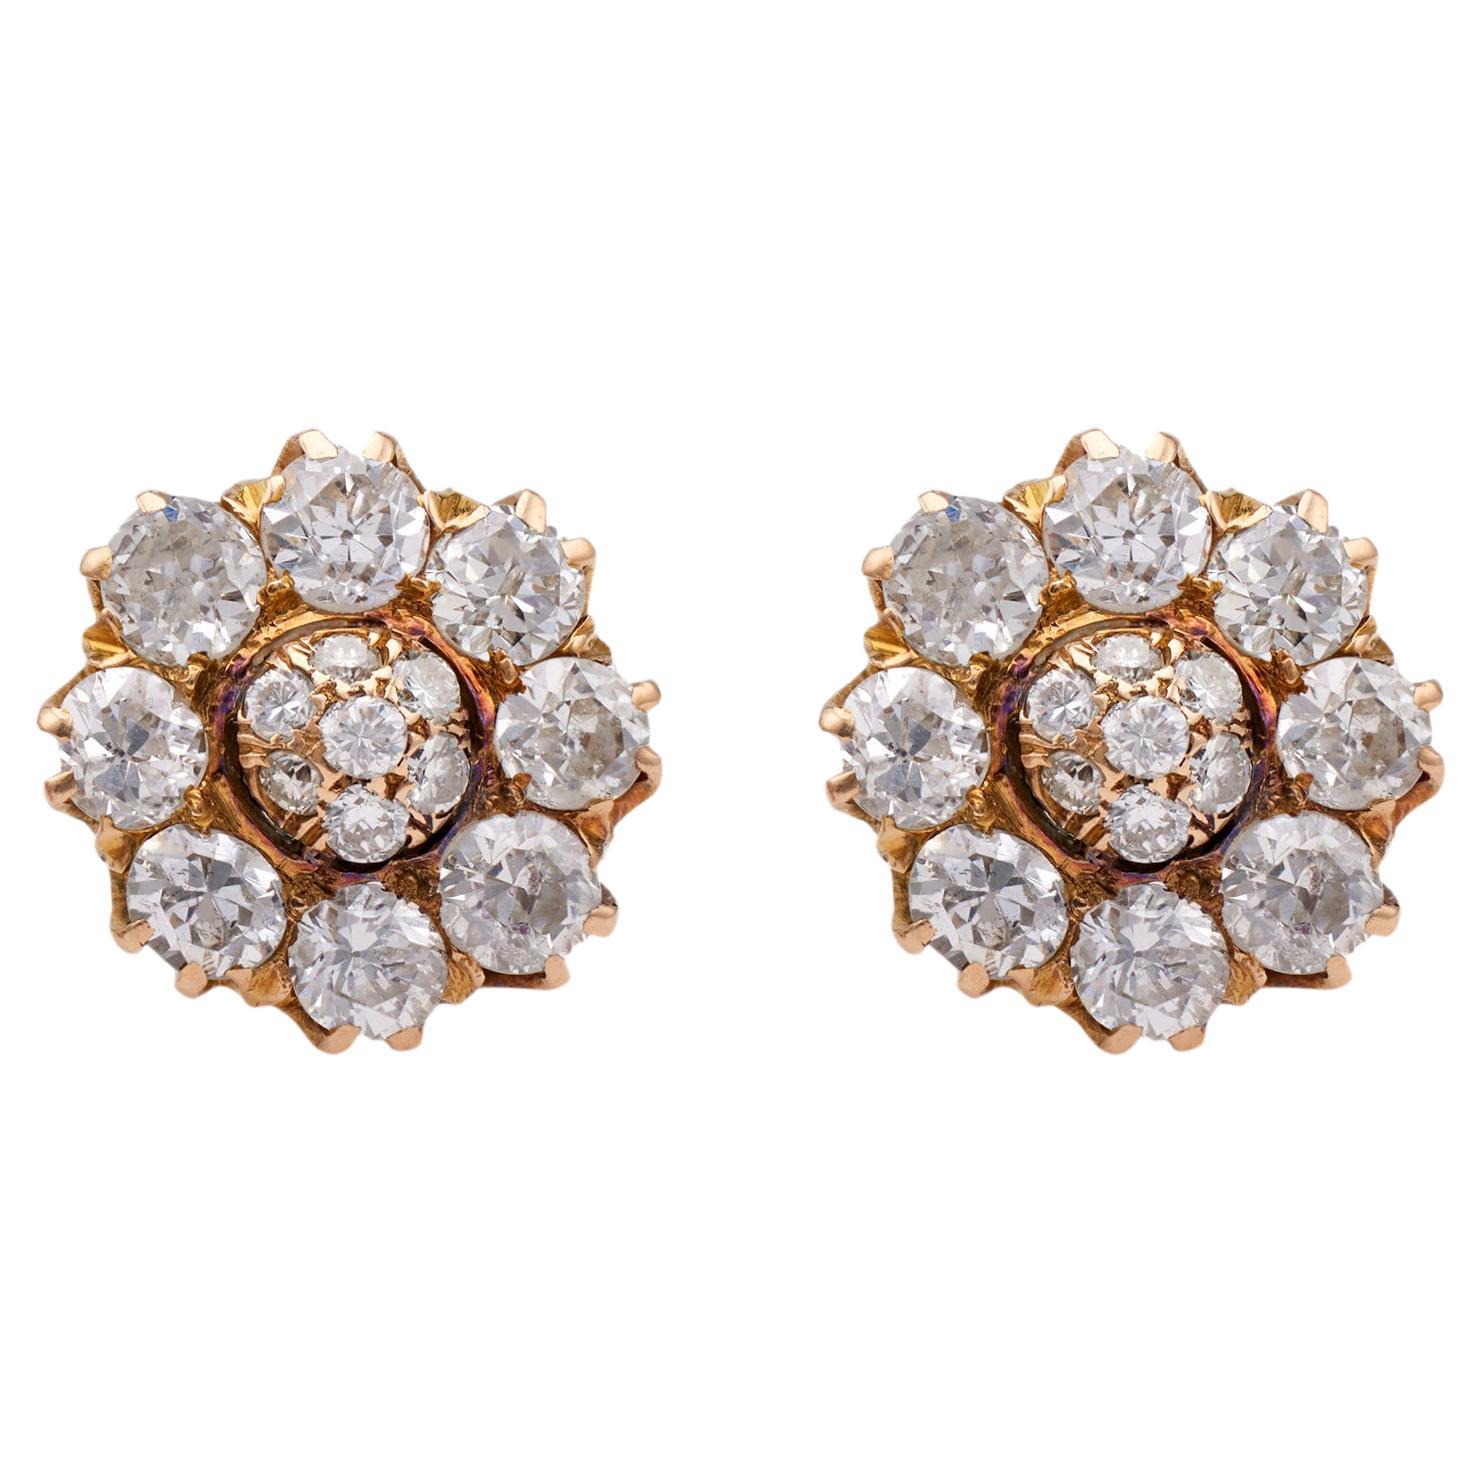 Pair of Edwardian Diamond 14k Yellow Gold Cluster Stud Earrings